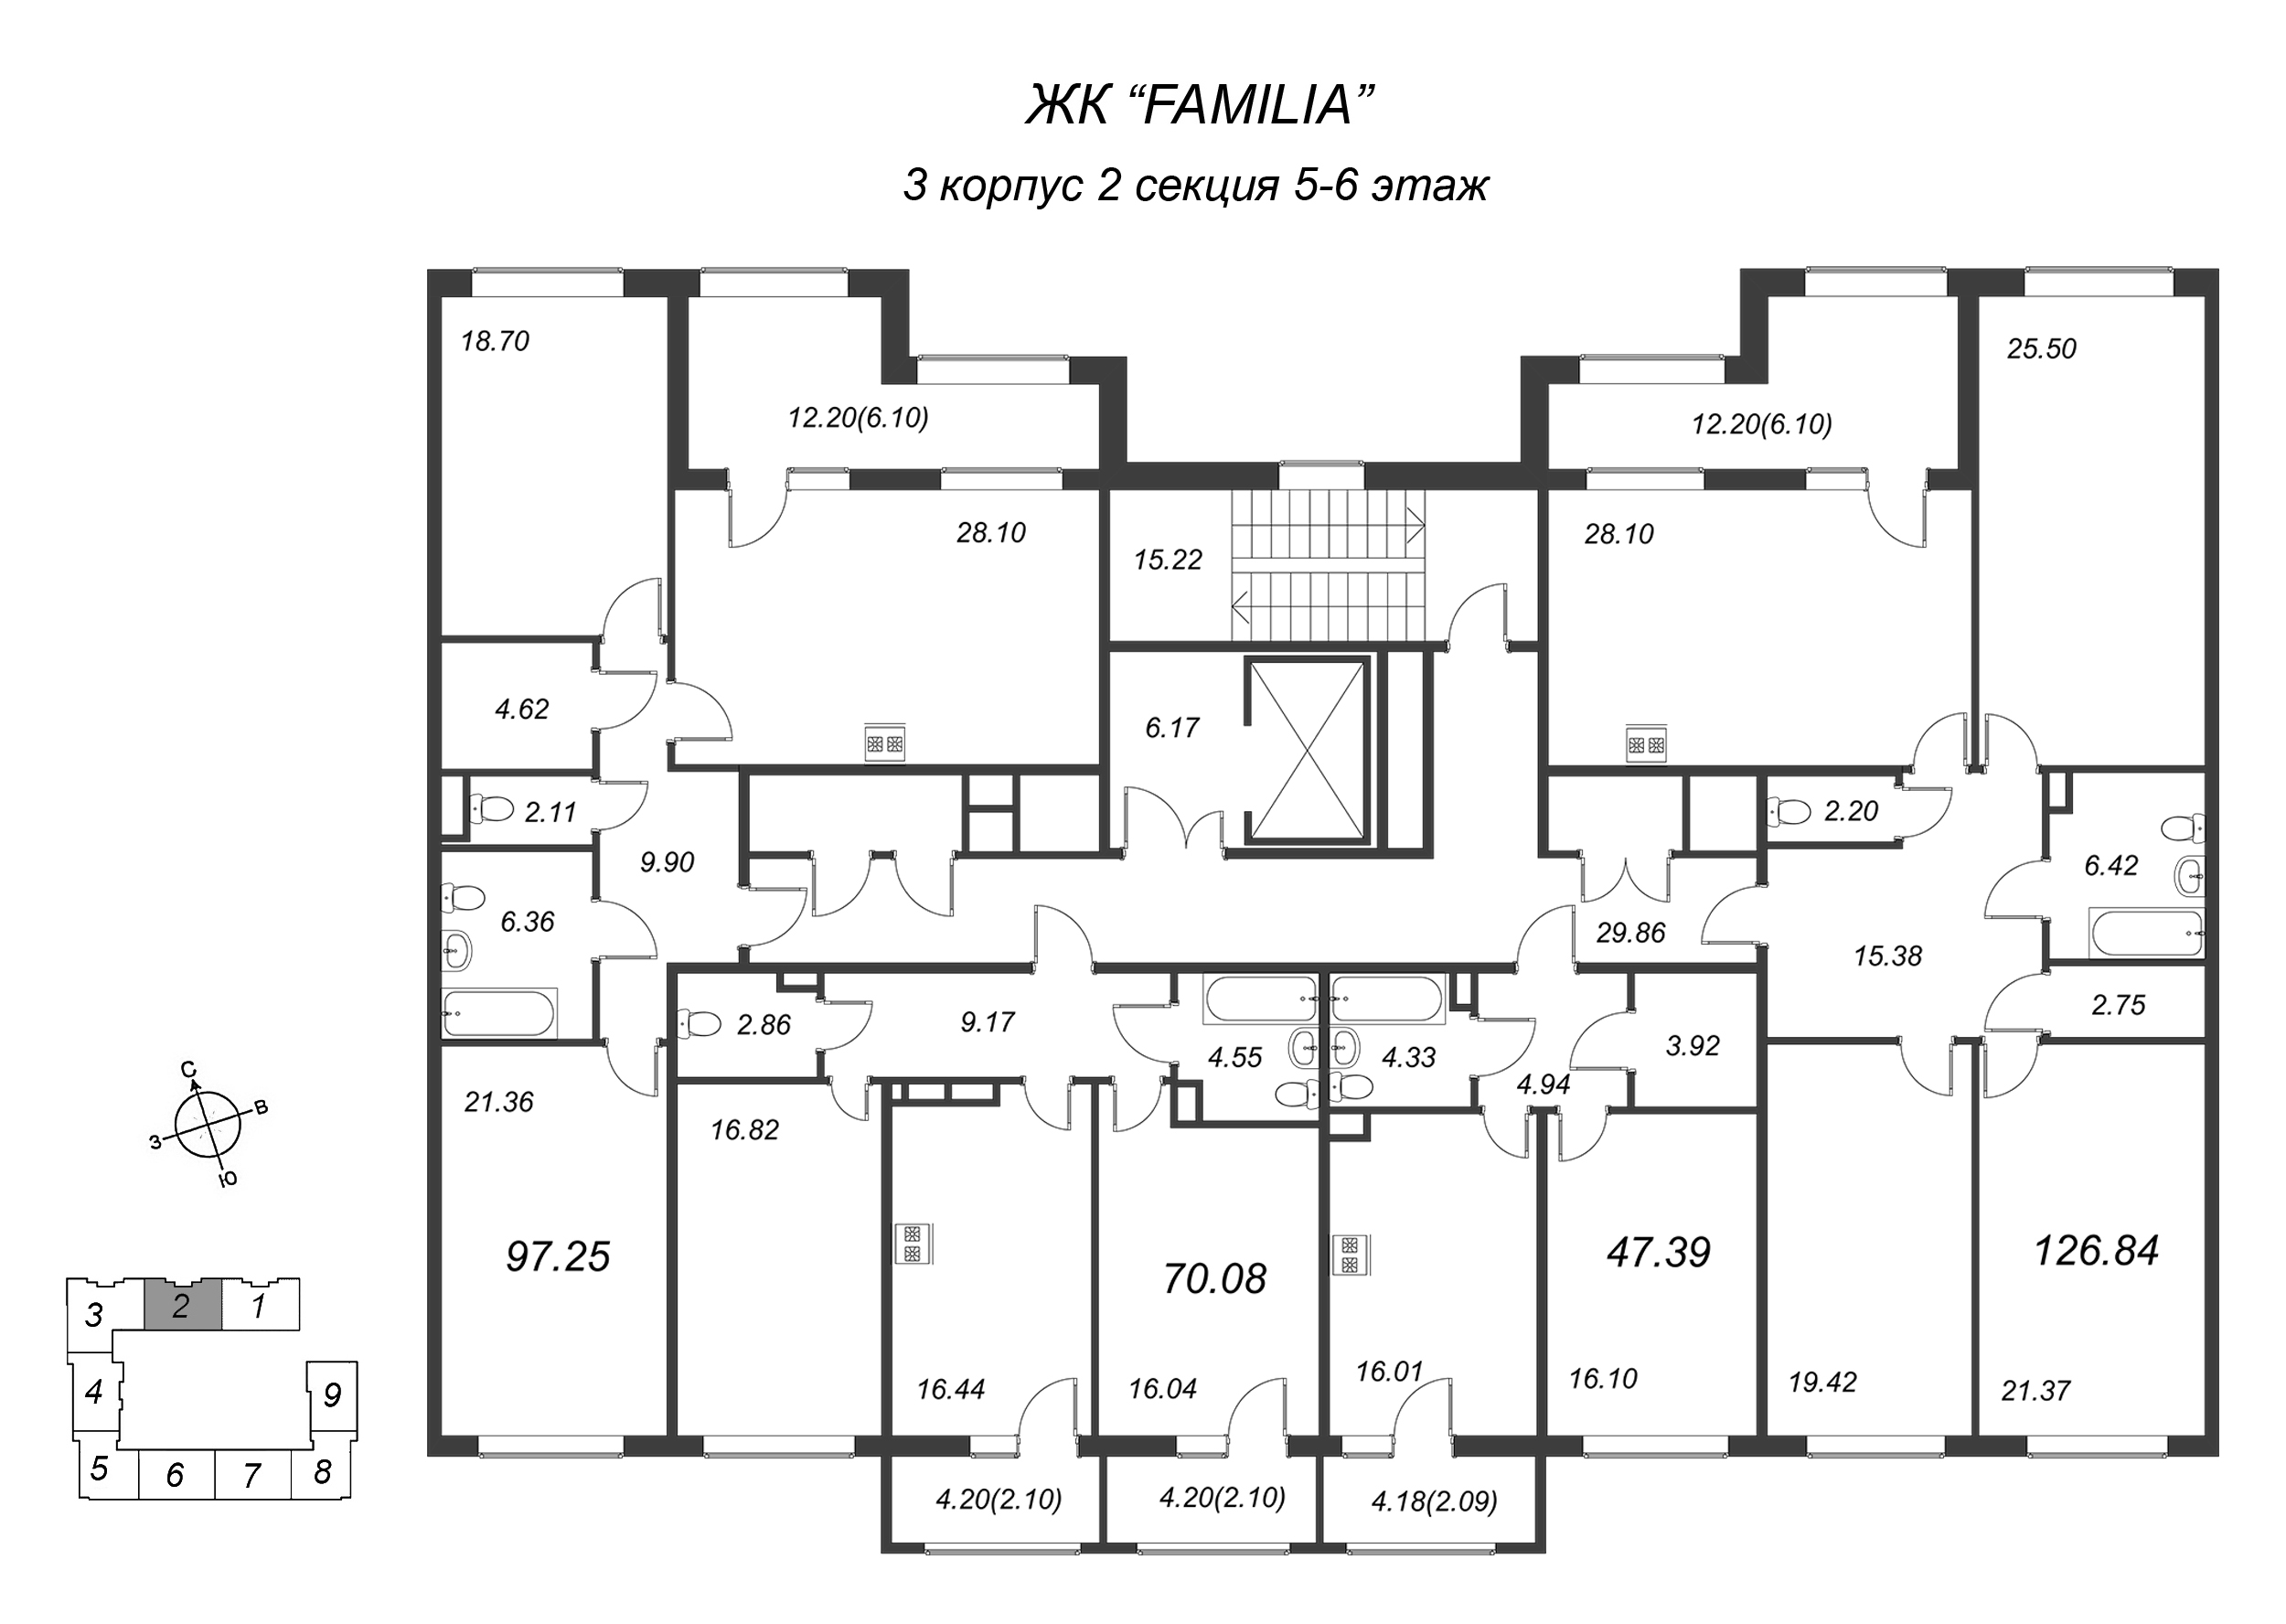 2-комнатная (Евро) квартира, 47.3 м² в ЖК "FAMILIA" - планировка этажа